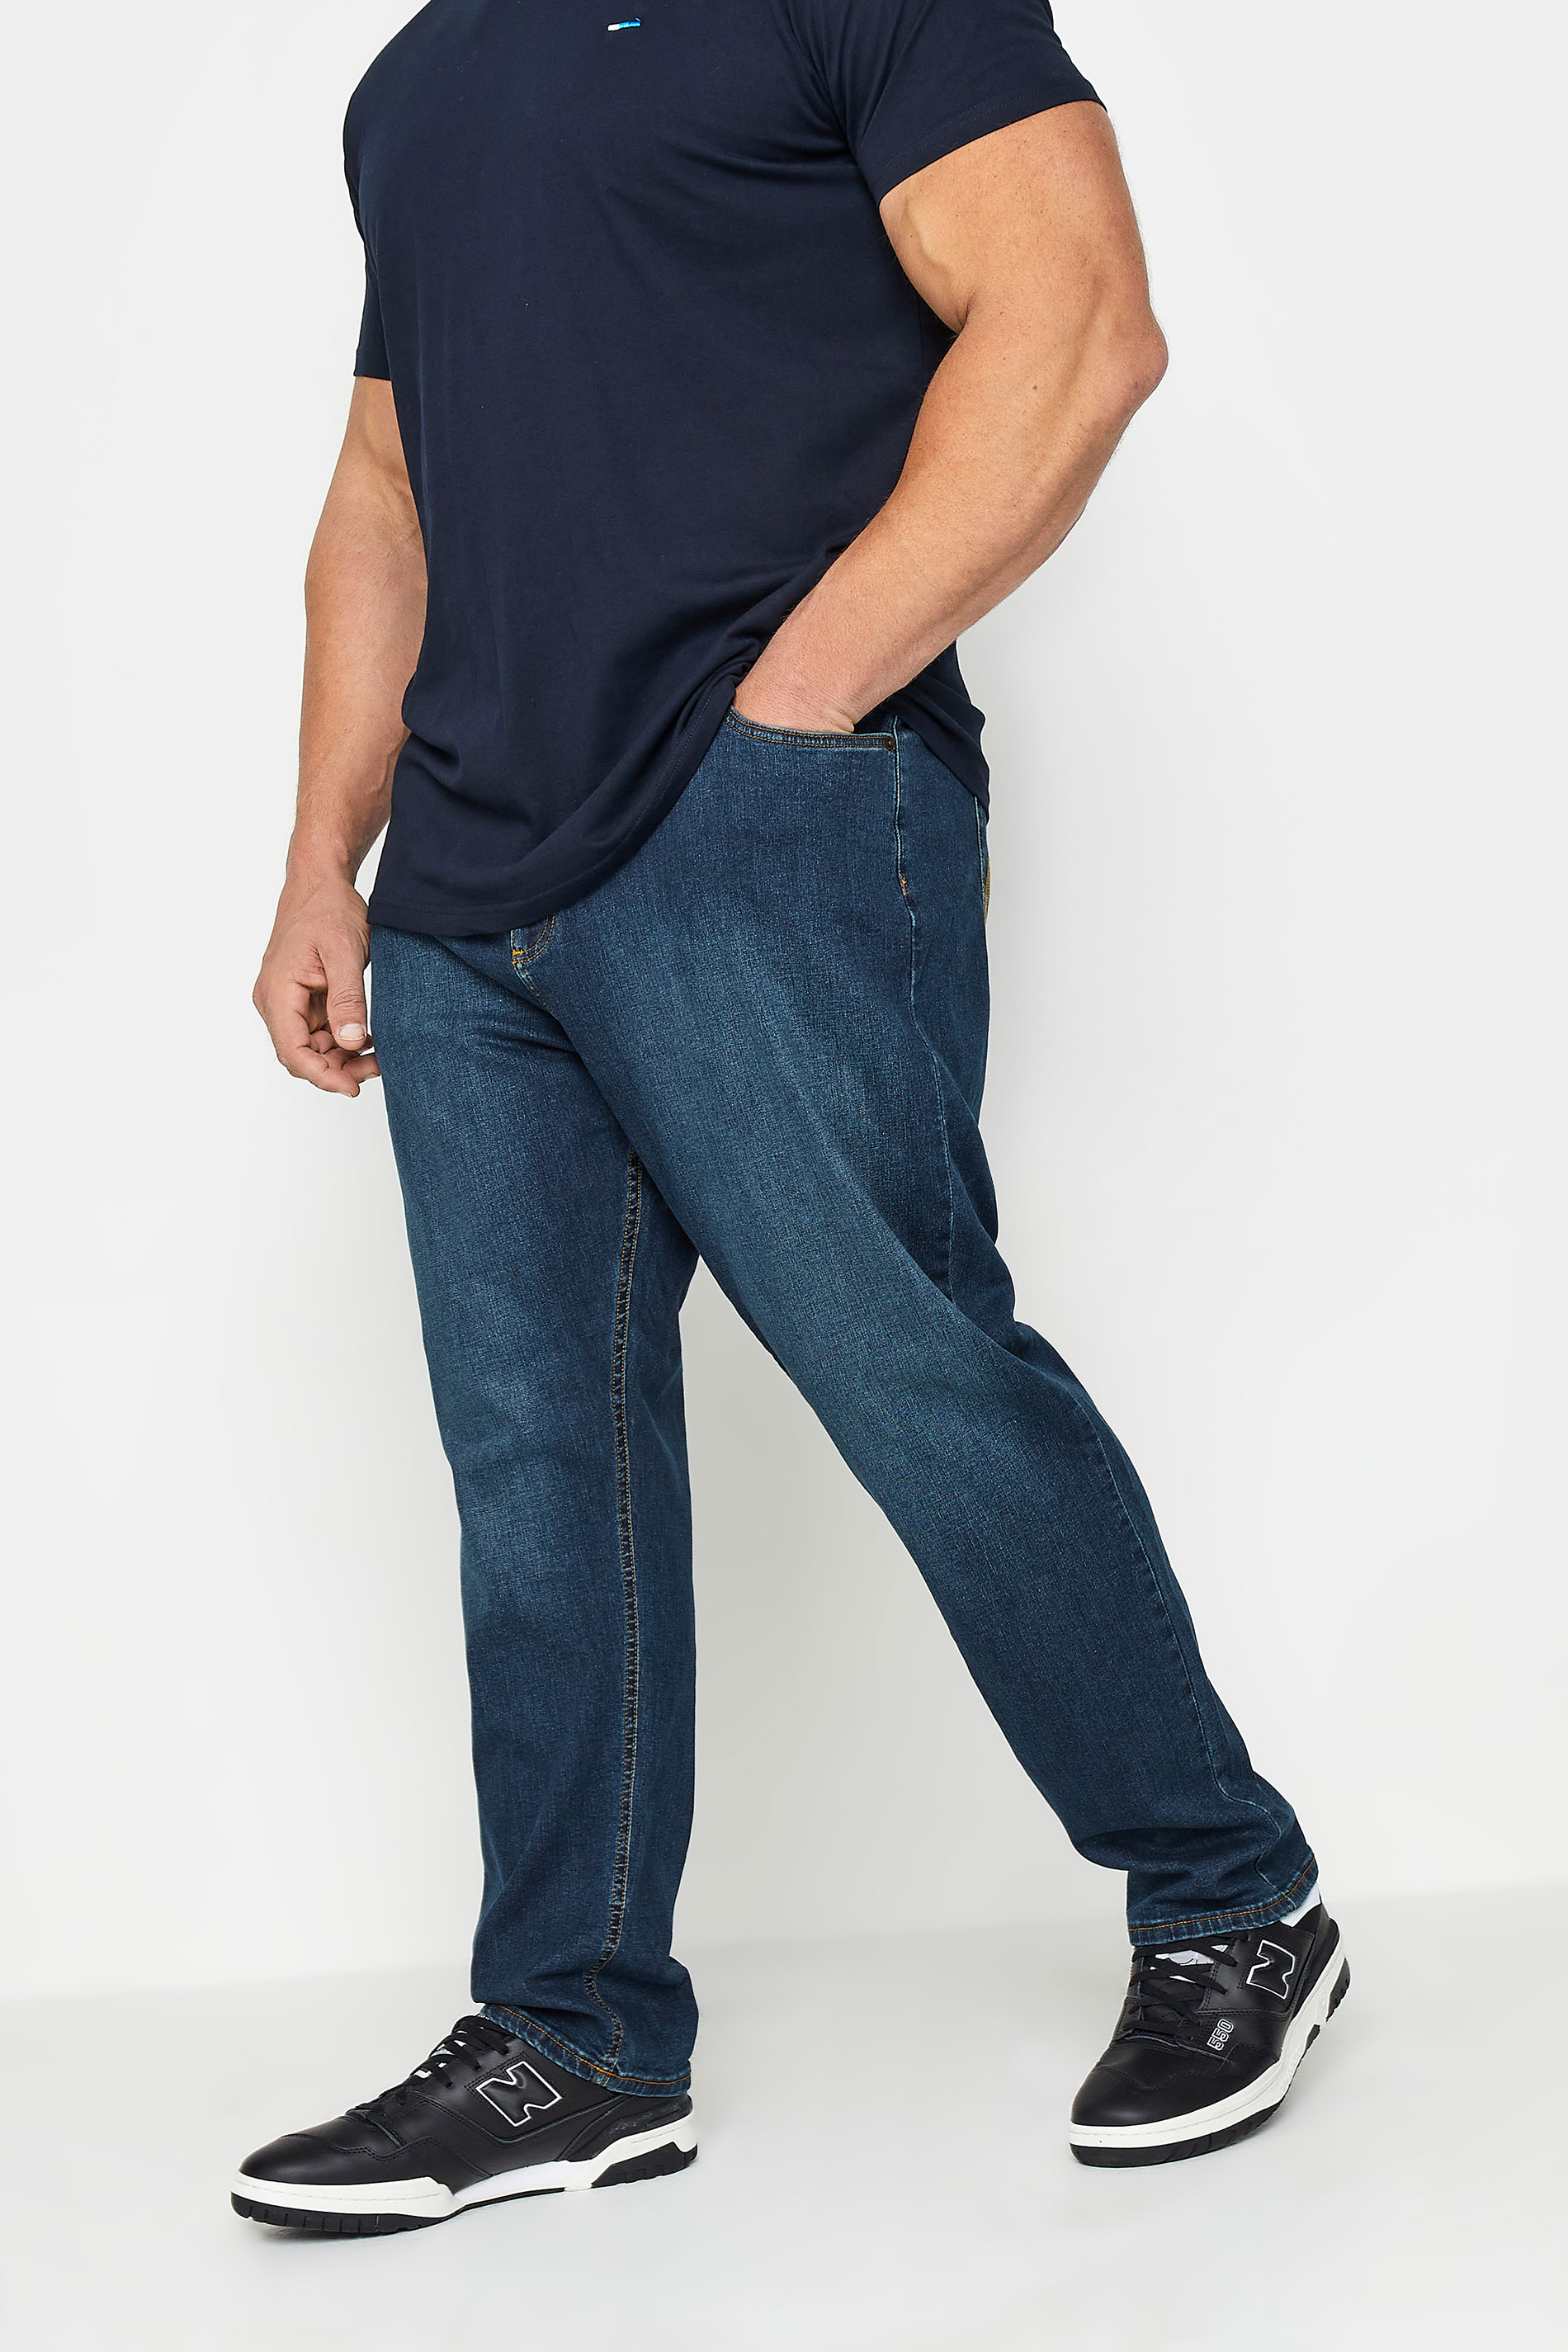 BadRhino Big & Tall Mid Blue Stretch Jeans | BadRhino 1